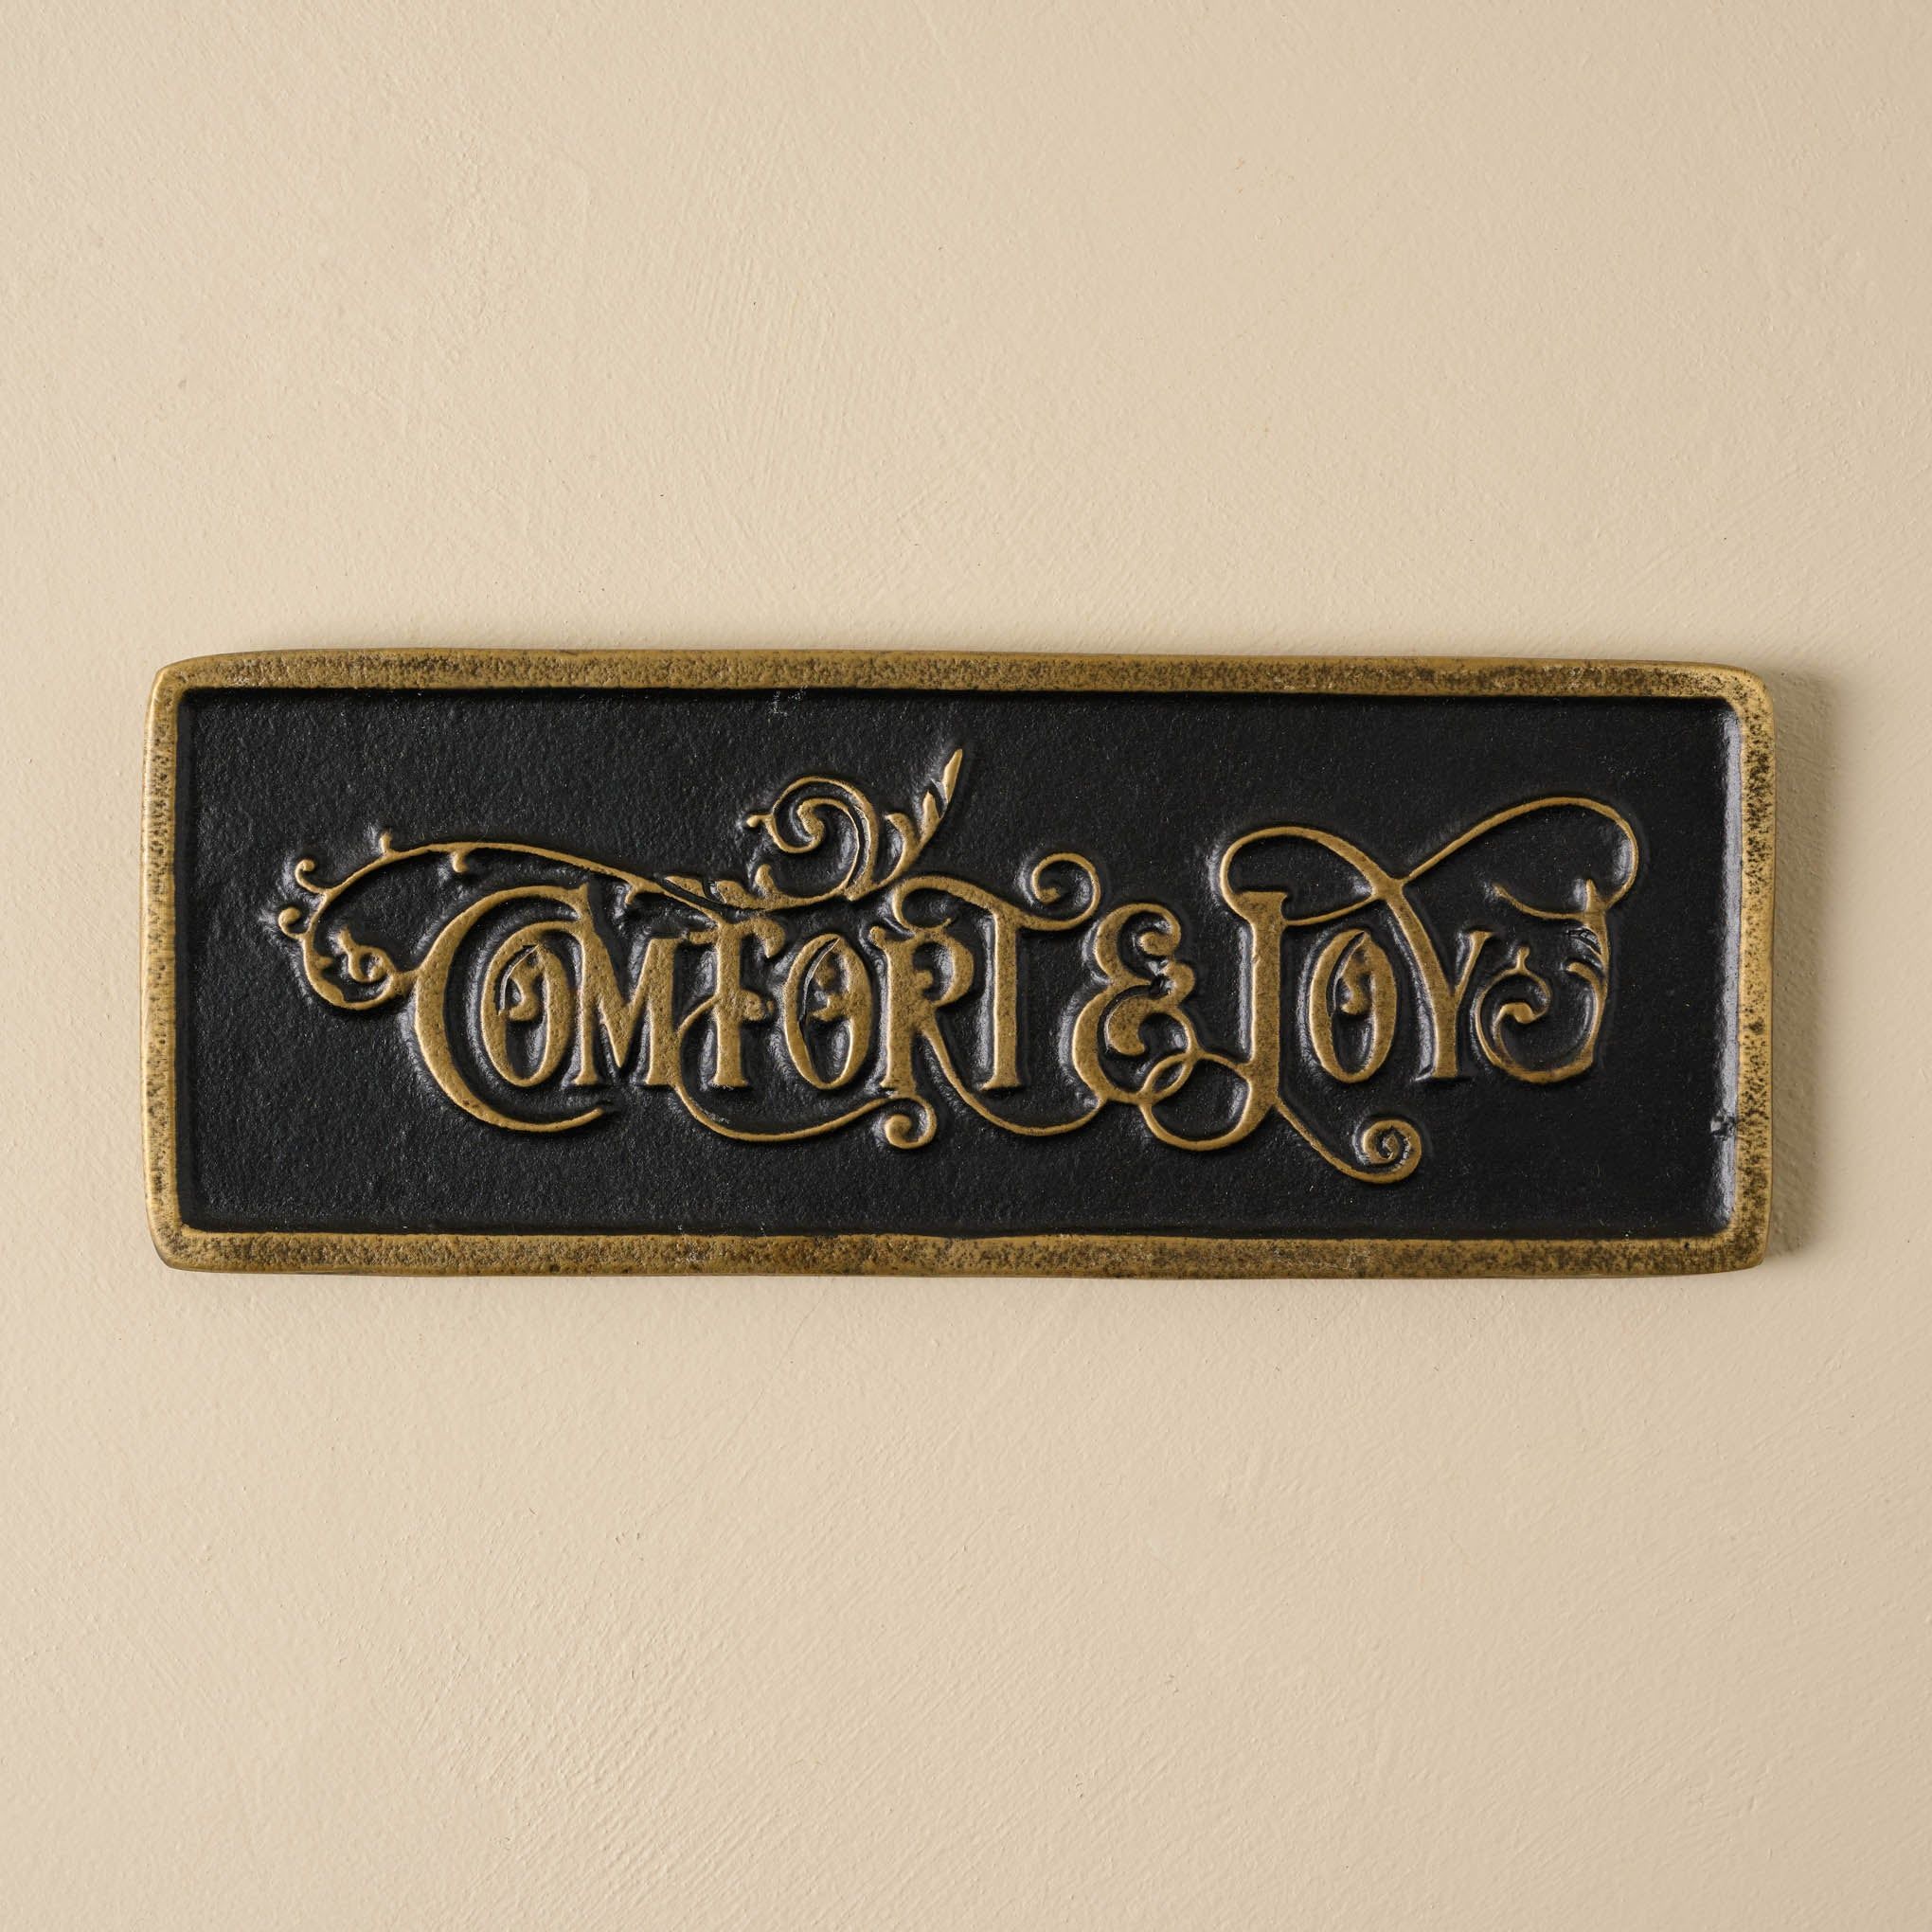 Comfort & Joy Metal Wall Sign | Magnolia